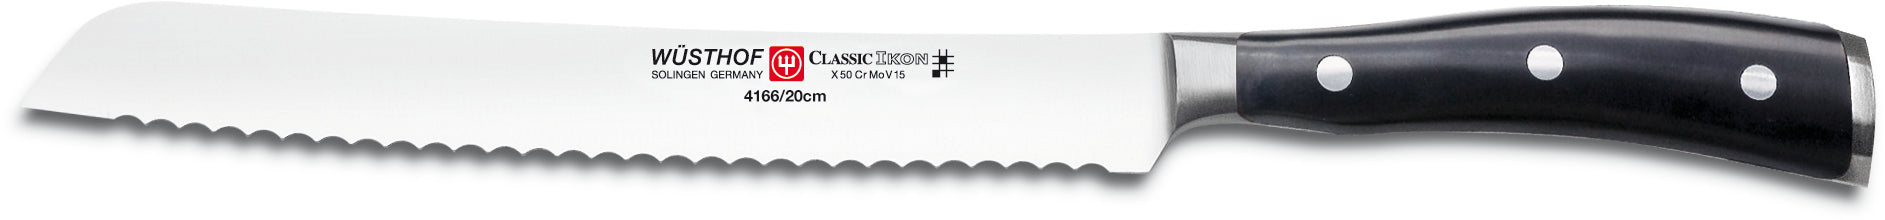 Wusthof Classic Ikon 8" Serrated Bread Knife